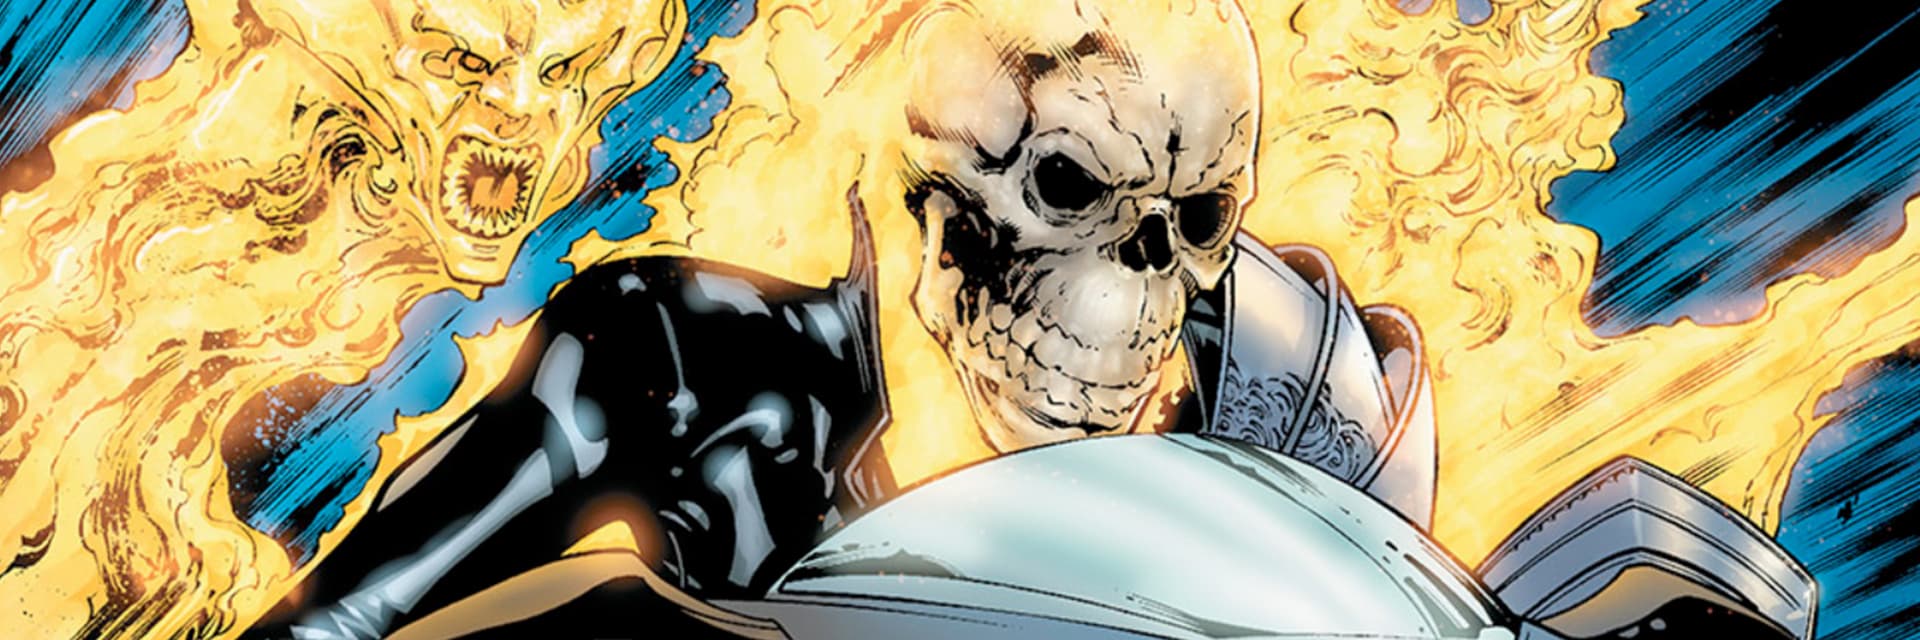 Ghost Rider Full Report In Comics